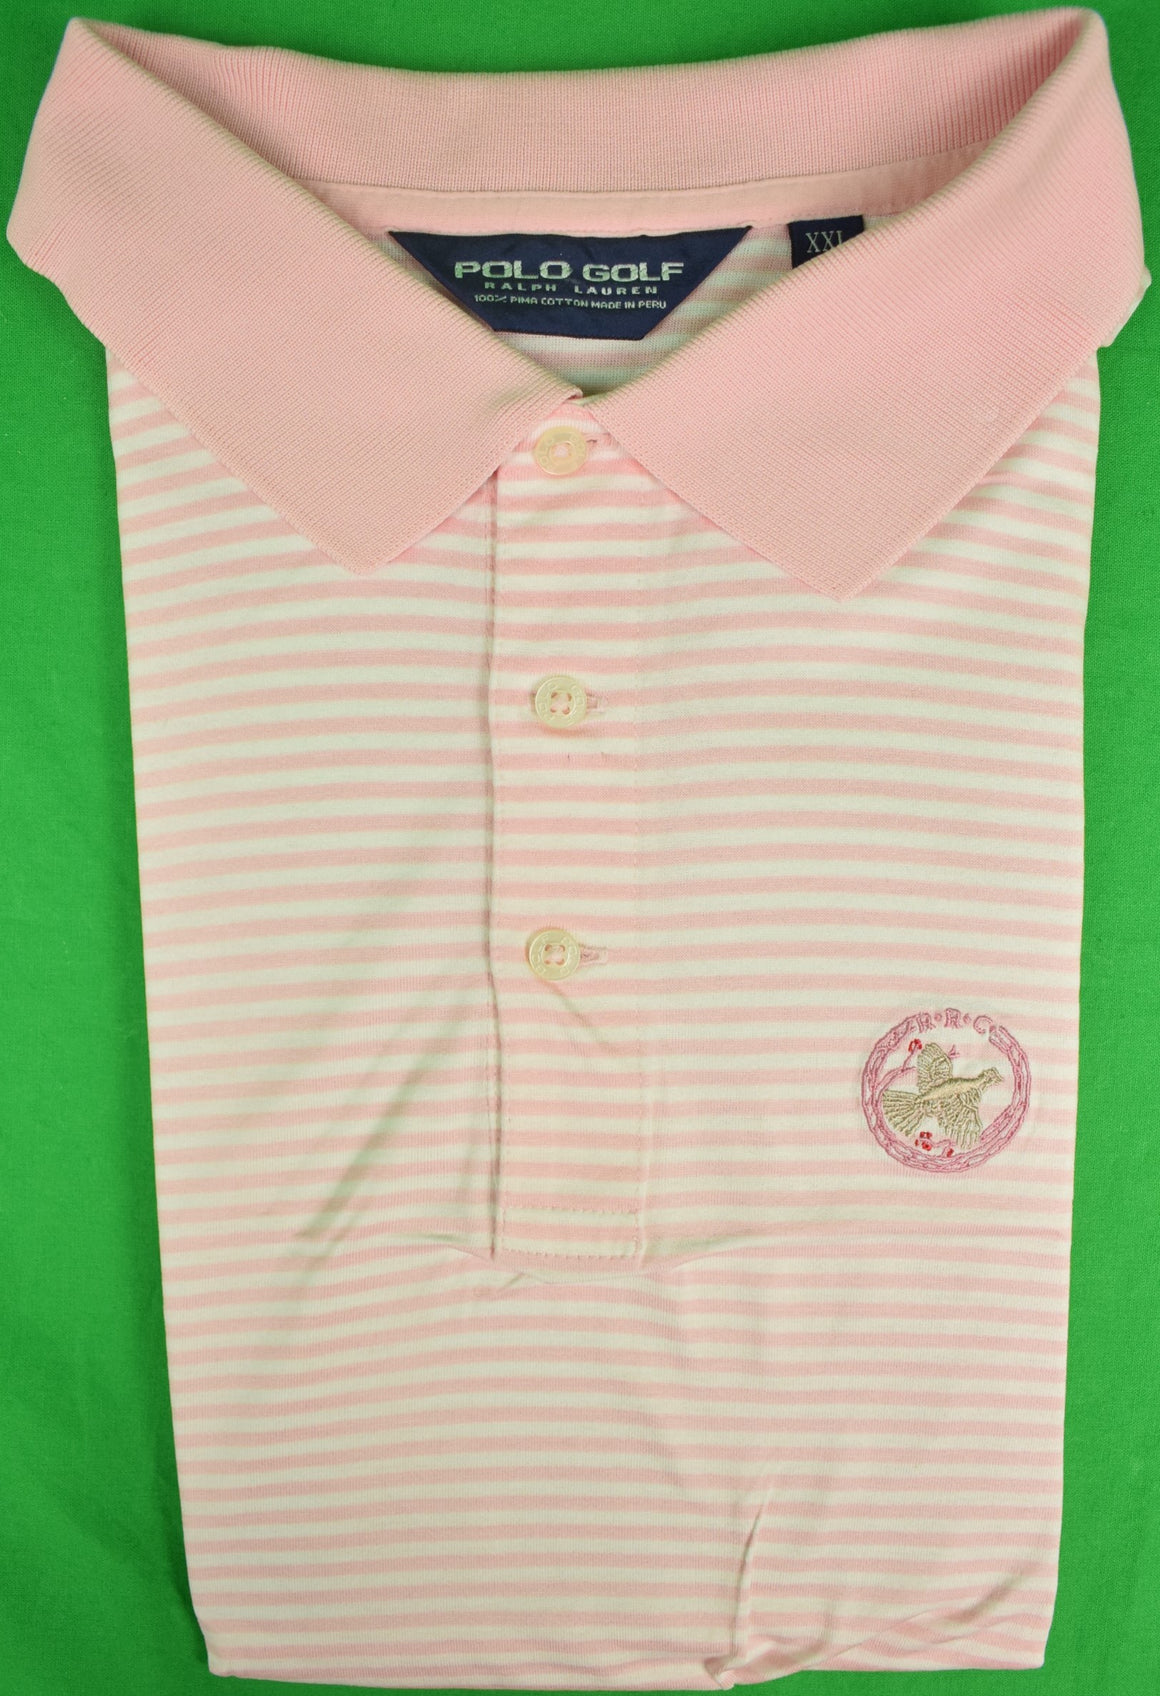 Ralph Lauren Polo Golf Pink/White S/S Stripe Shirt w/ Rolling Rock Club Logo Sz: XXL